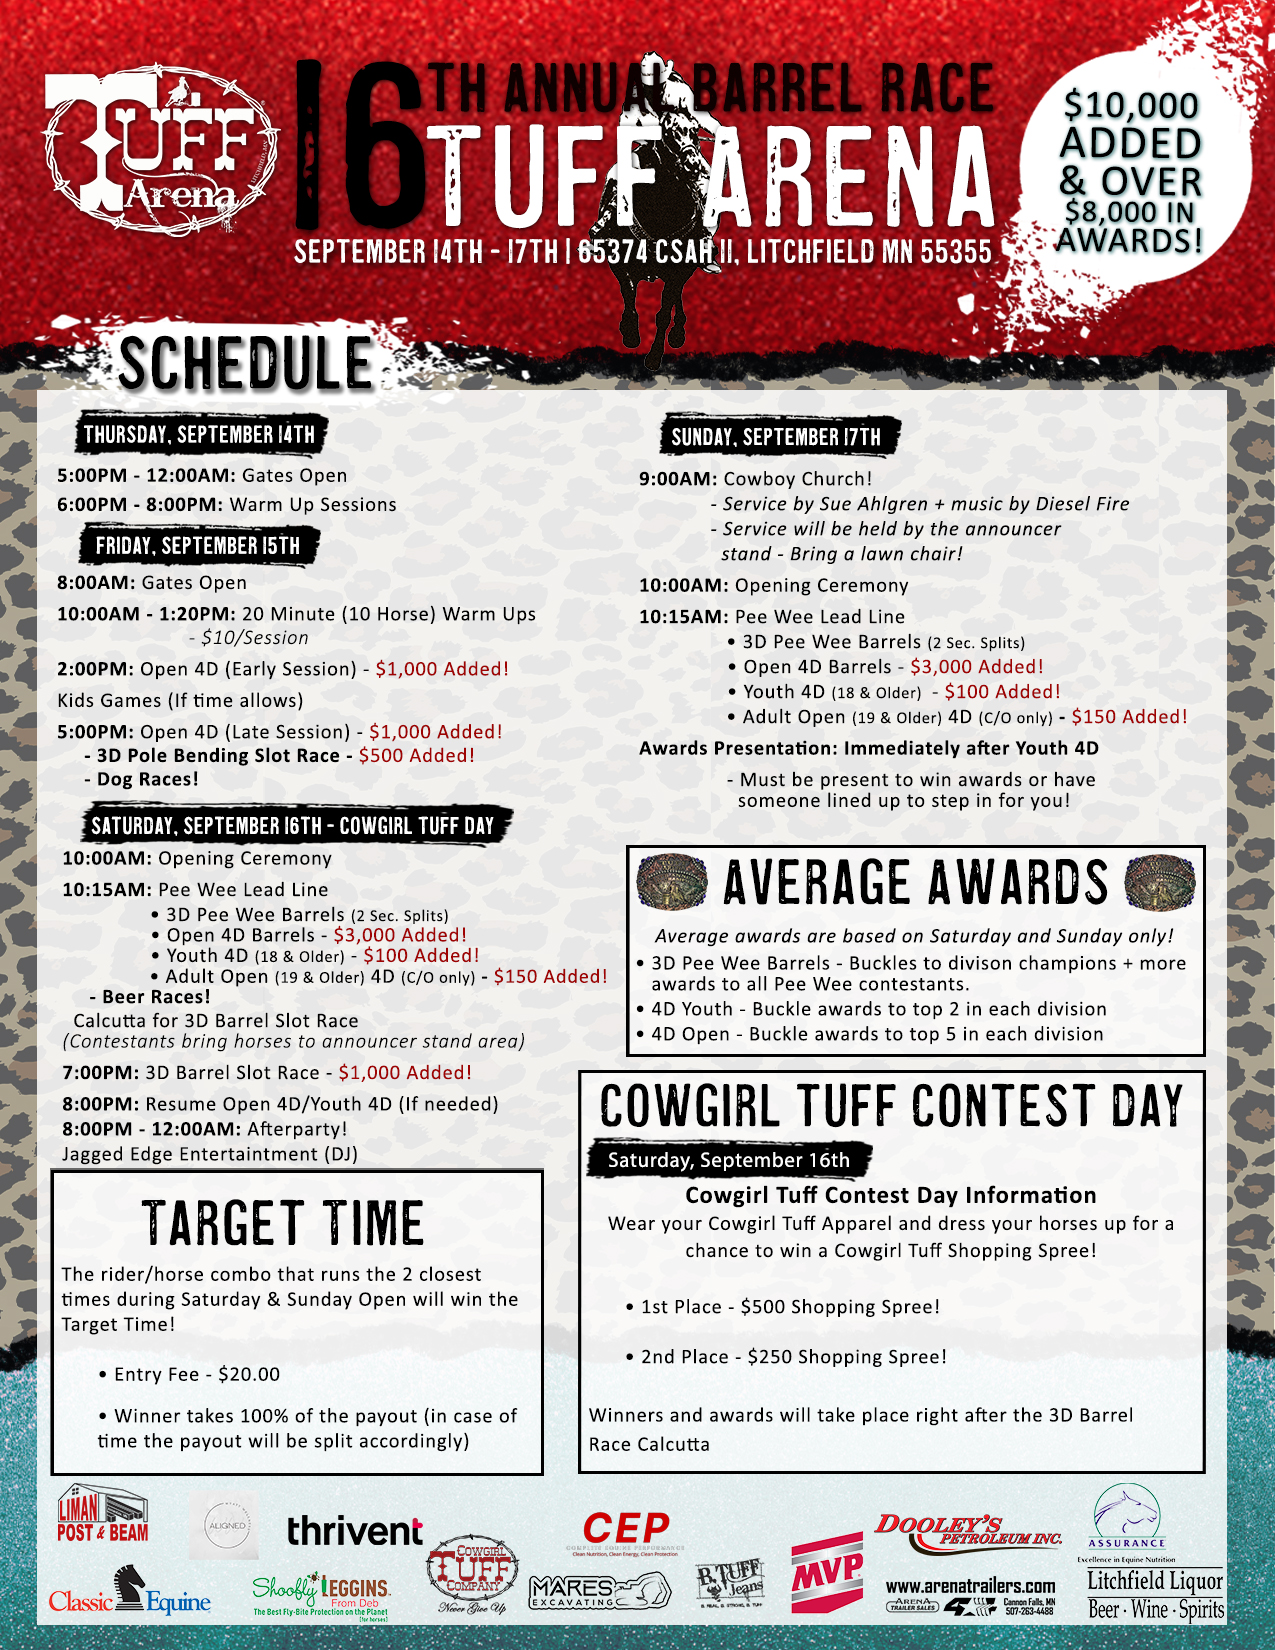 16th Annual Tuff Arena Barrel Race